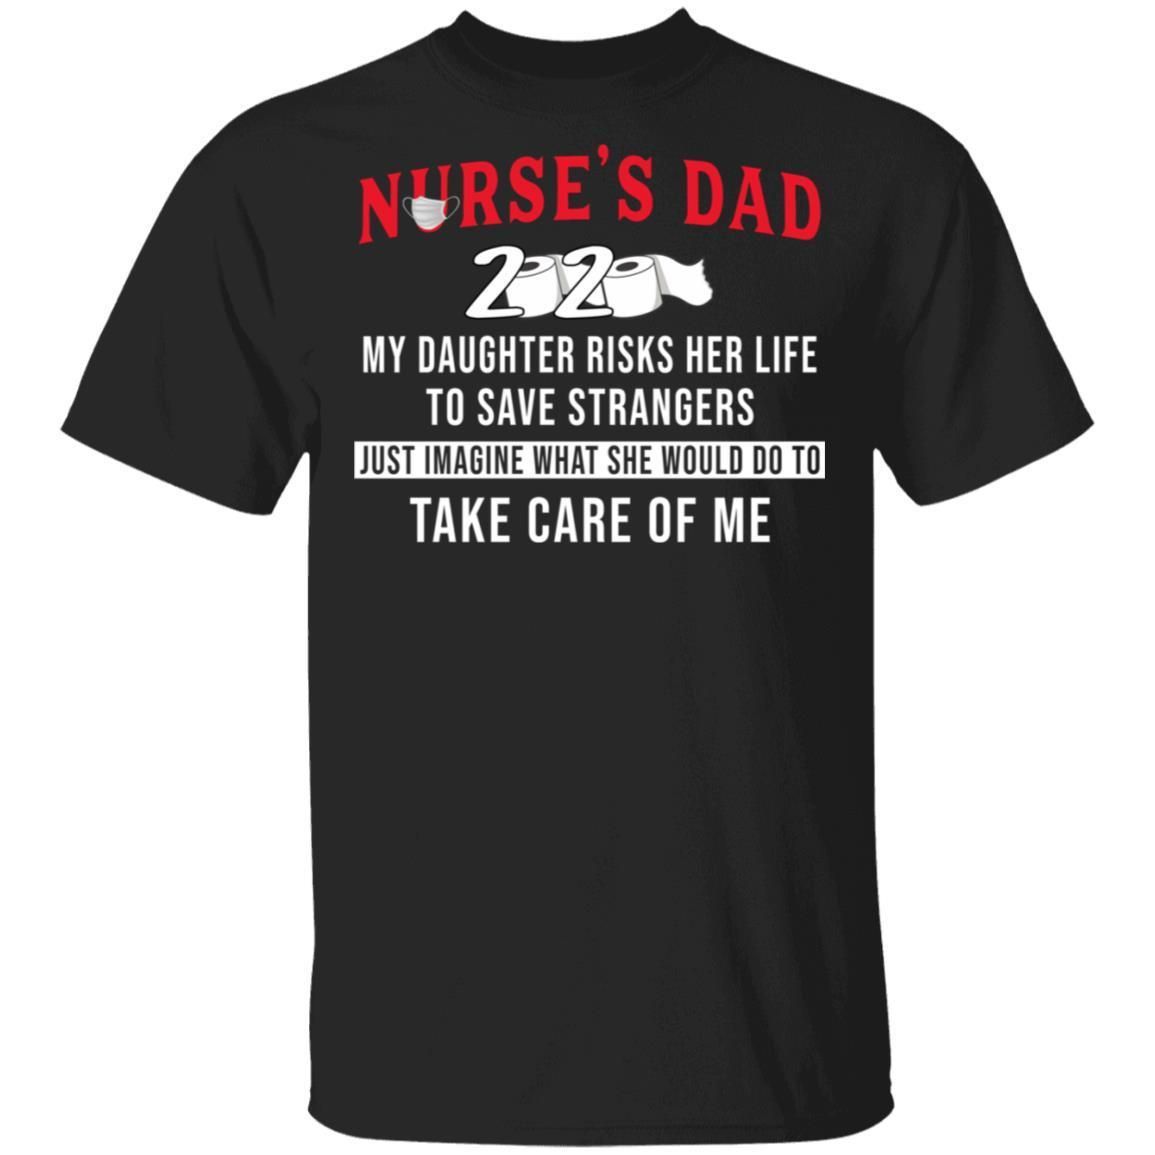 Nurse's Dad 2020 My Daughter Risks Her Life Shirts